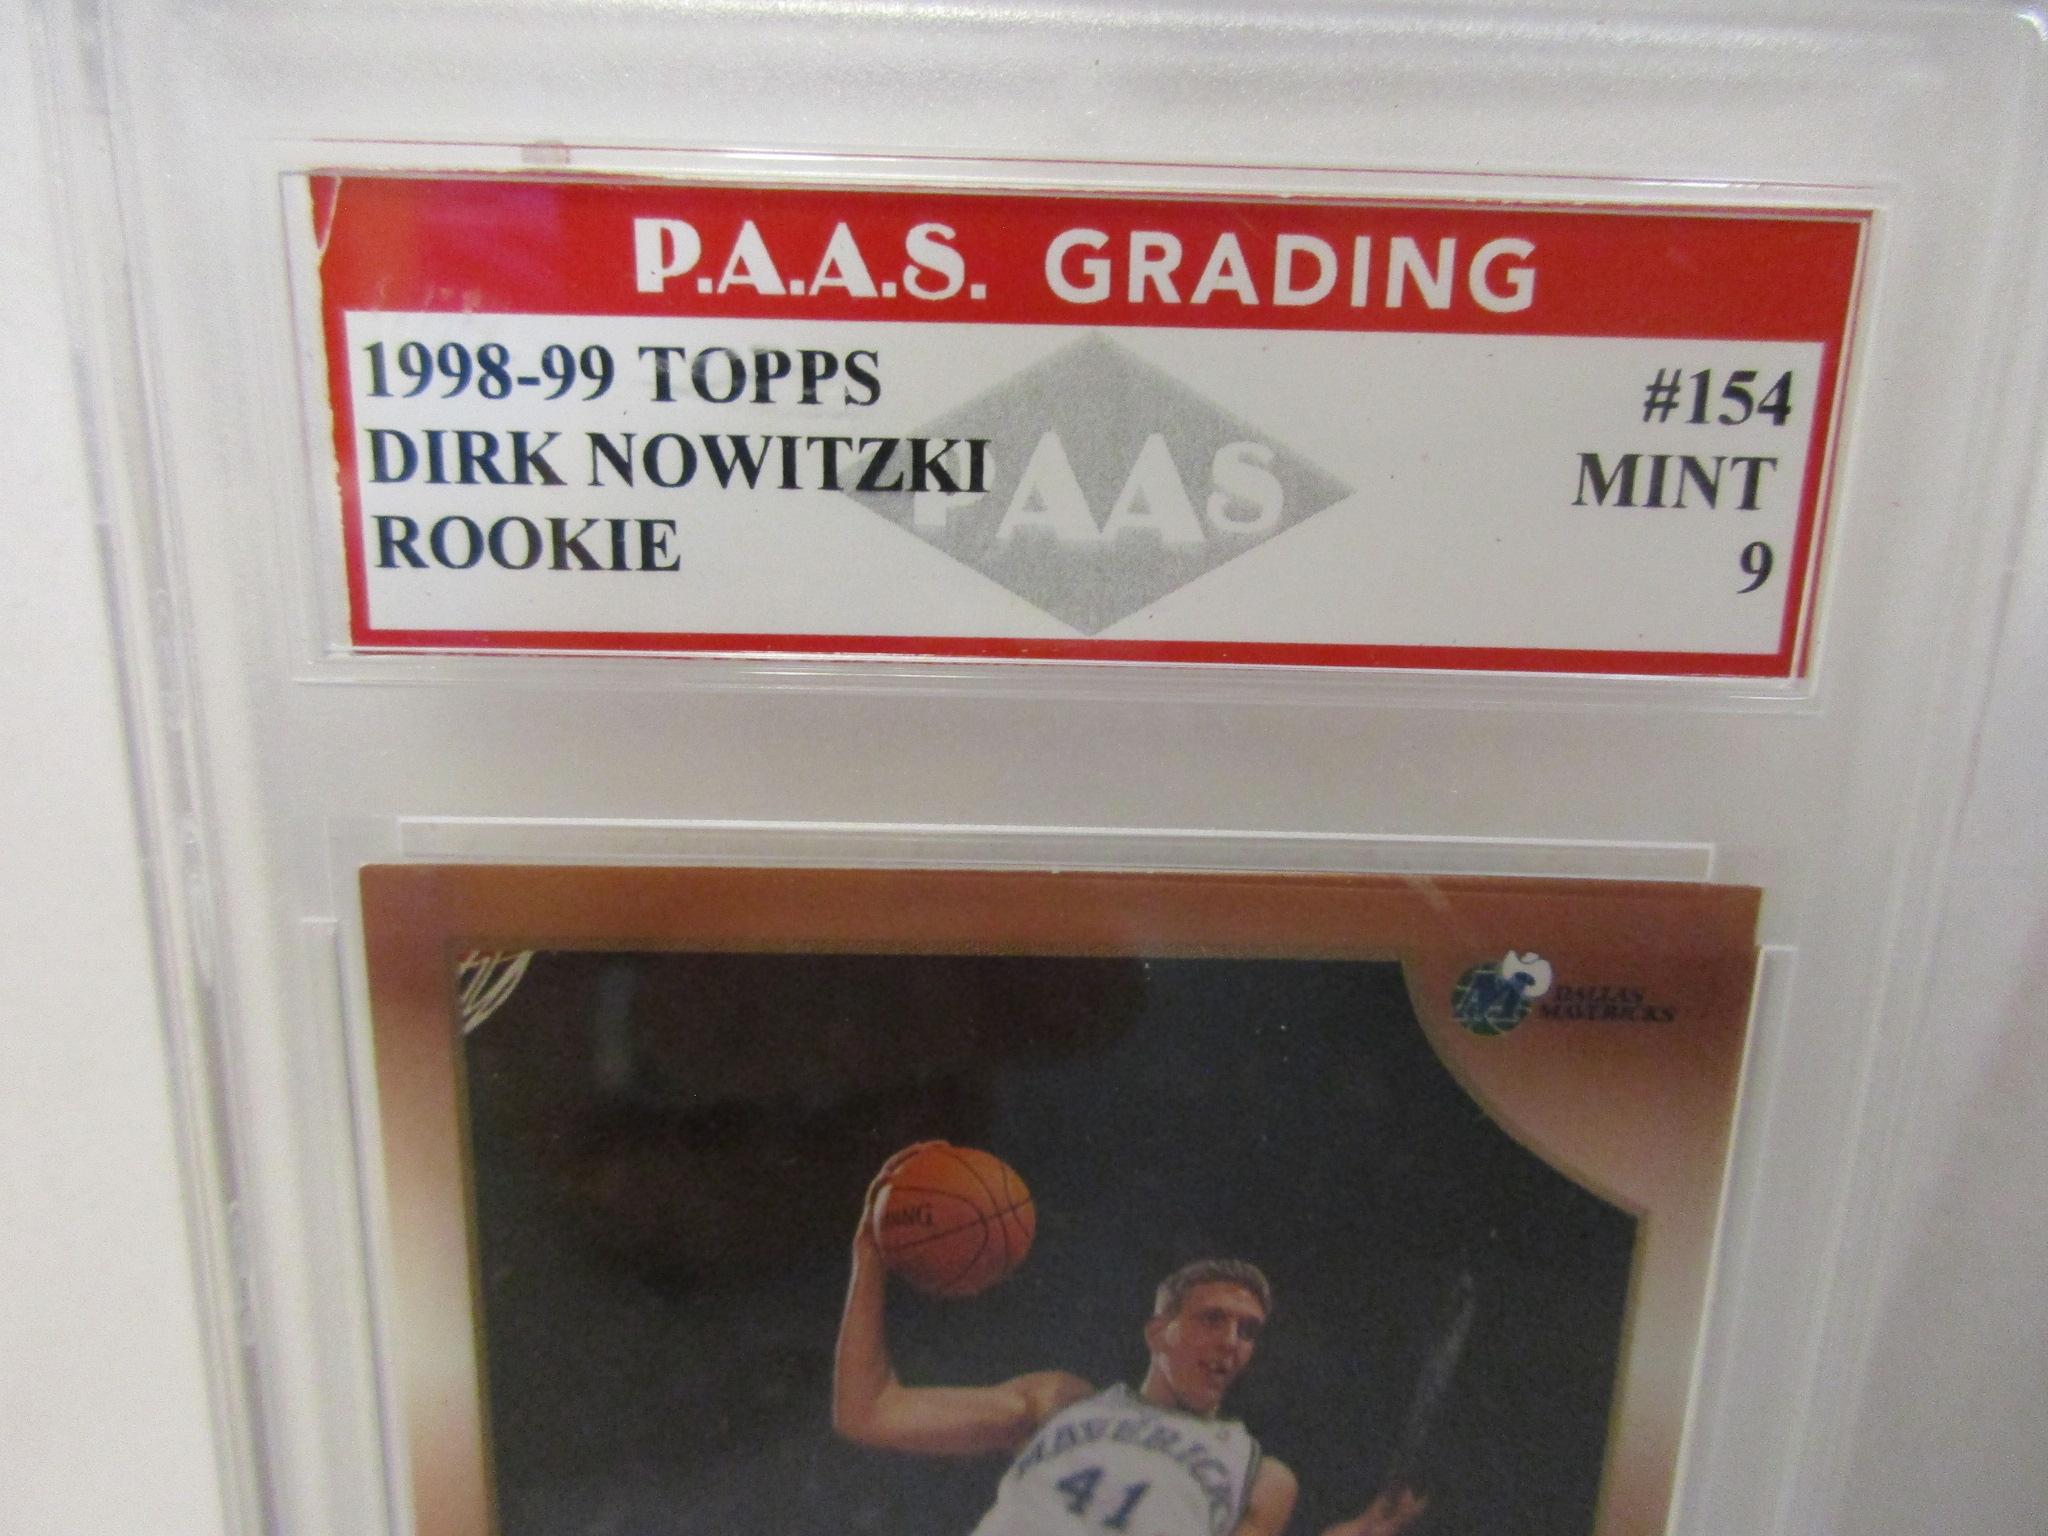 Dirk Nowitzki Mavericks 1998-99 Topps ROOKIE #154 graded PAAS Mint 9